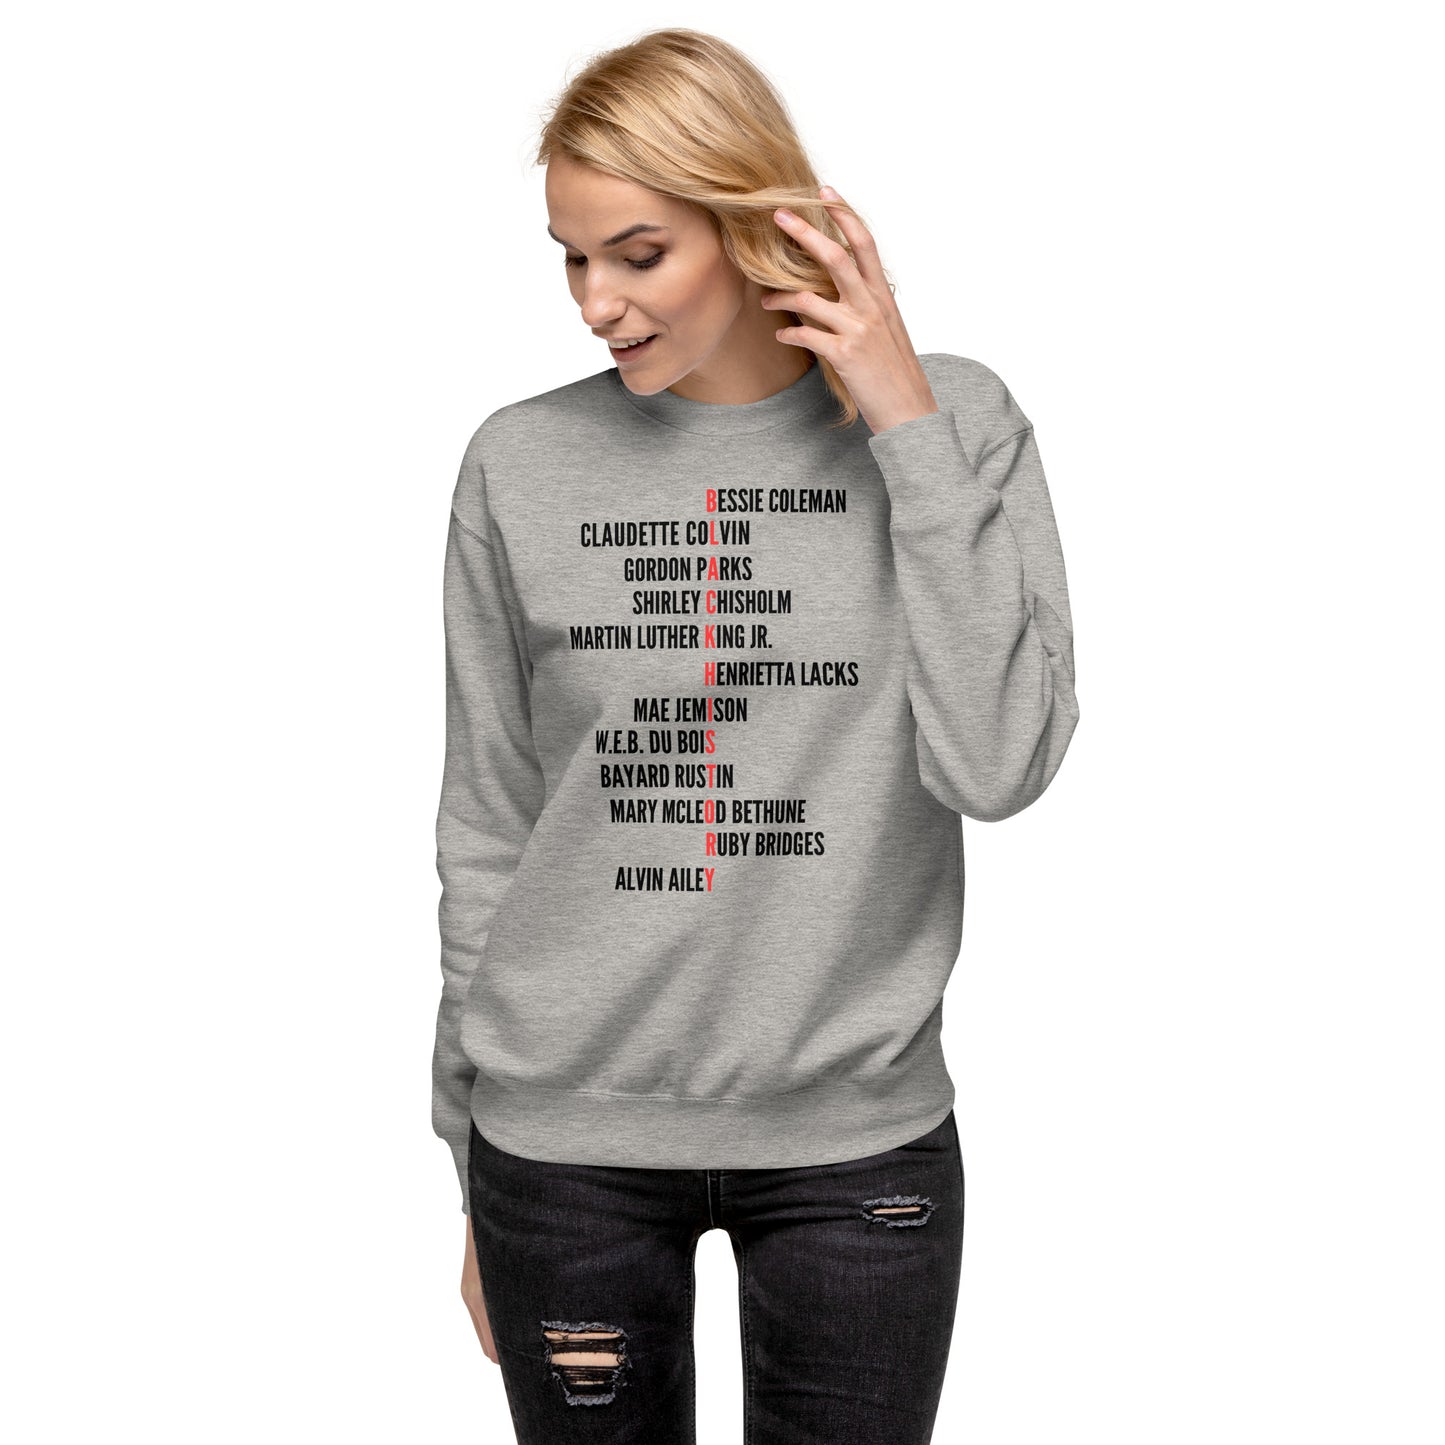 "Black History" Unisex Premium Sweatshirt